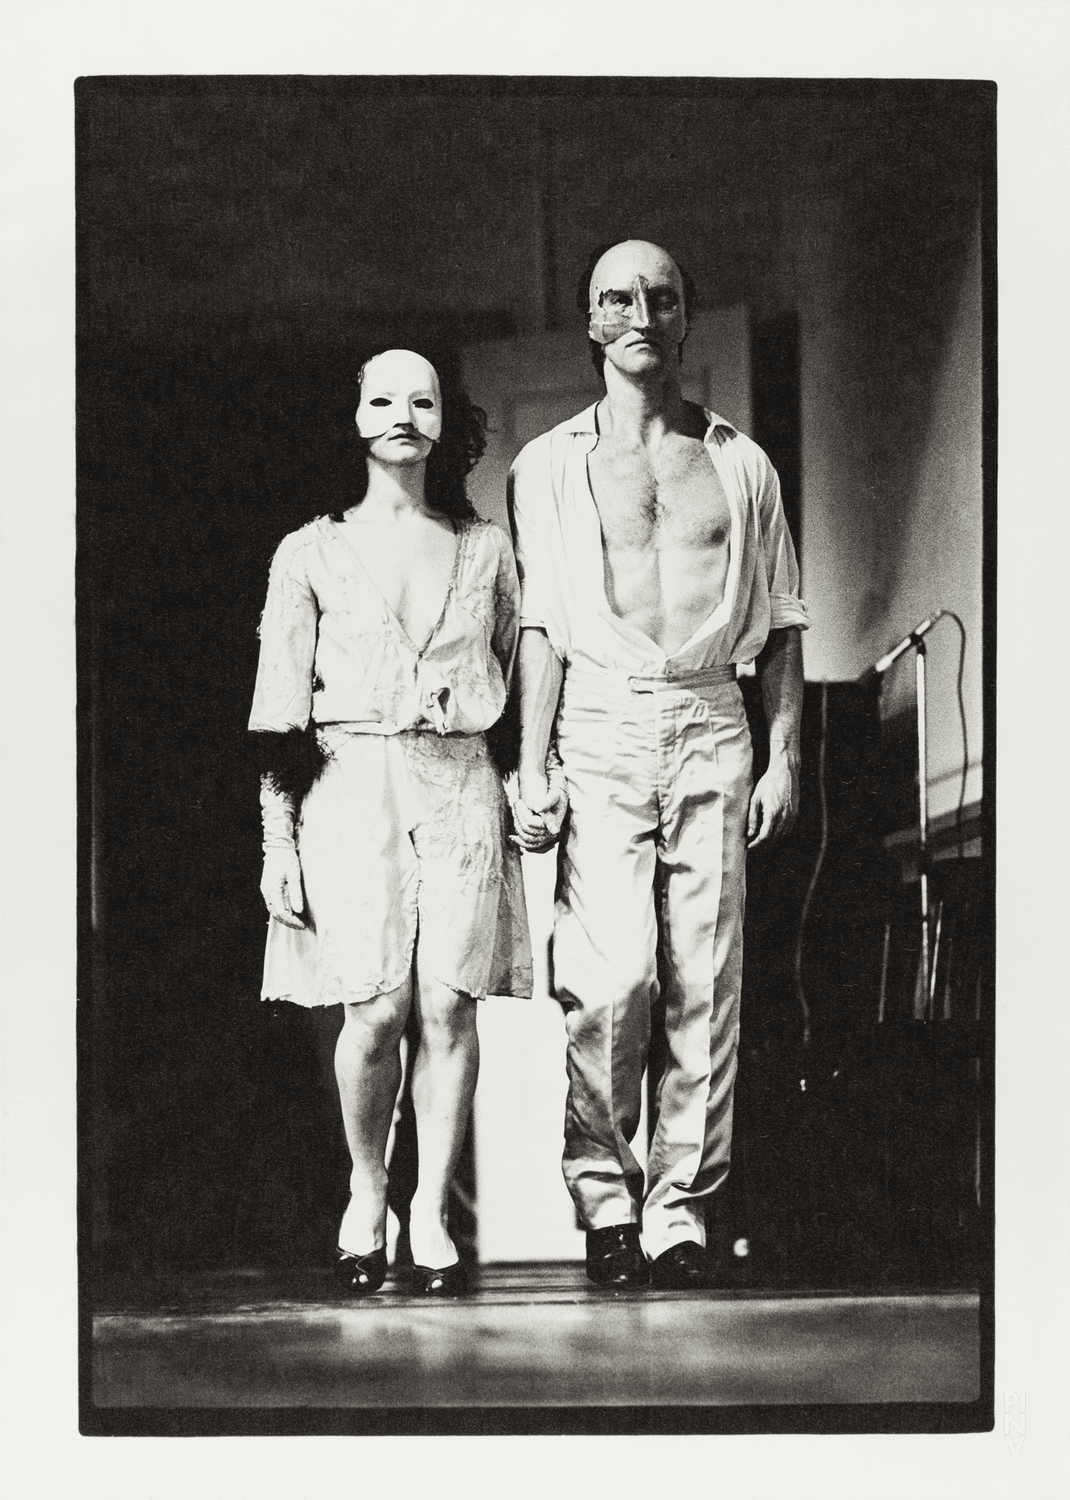 Fernando Cortizo and Beatrice Libonati in “Kontakthof” by Pina Bausch